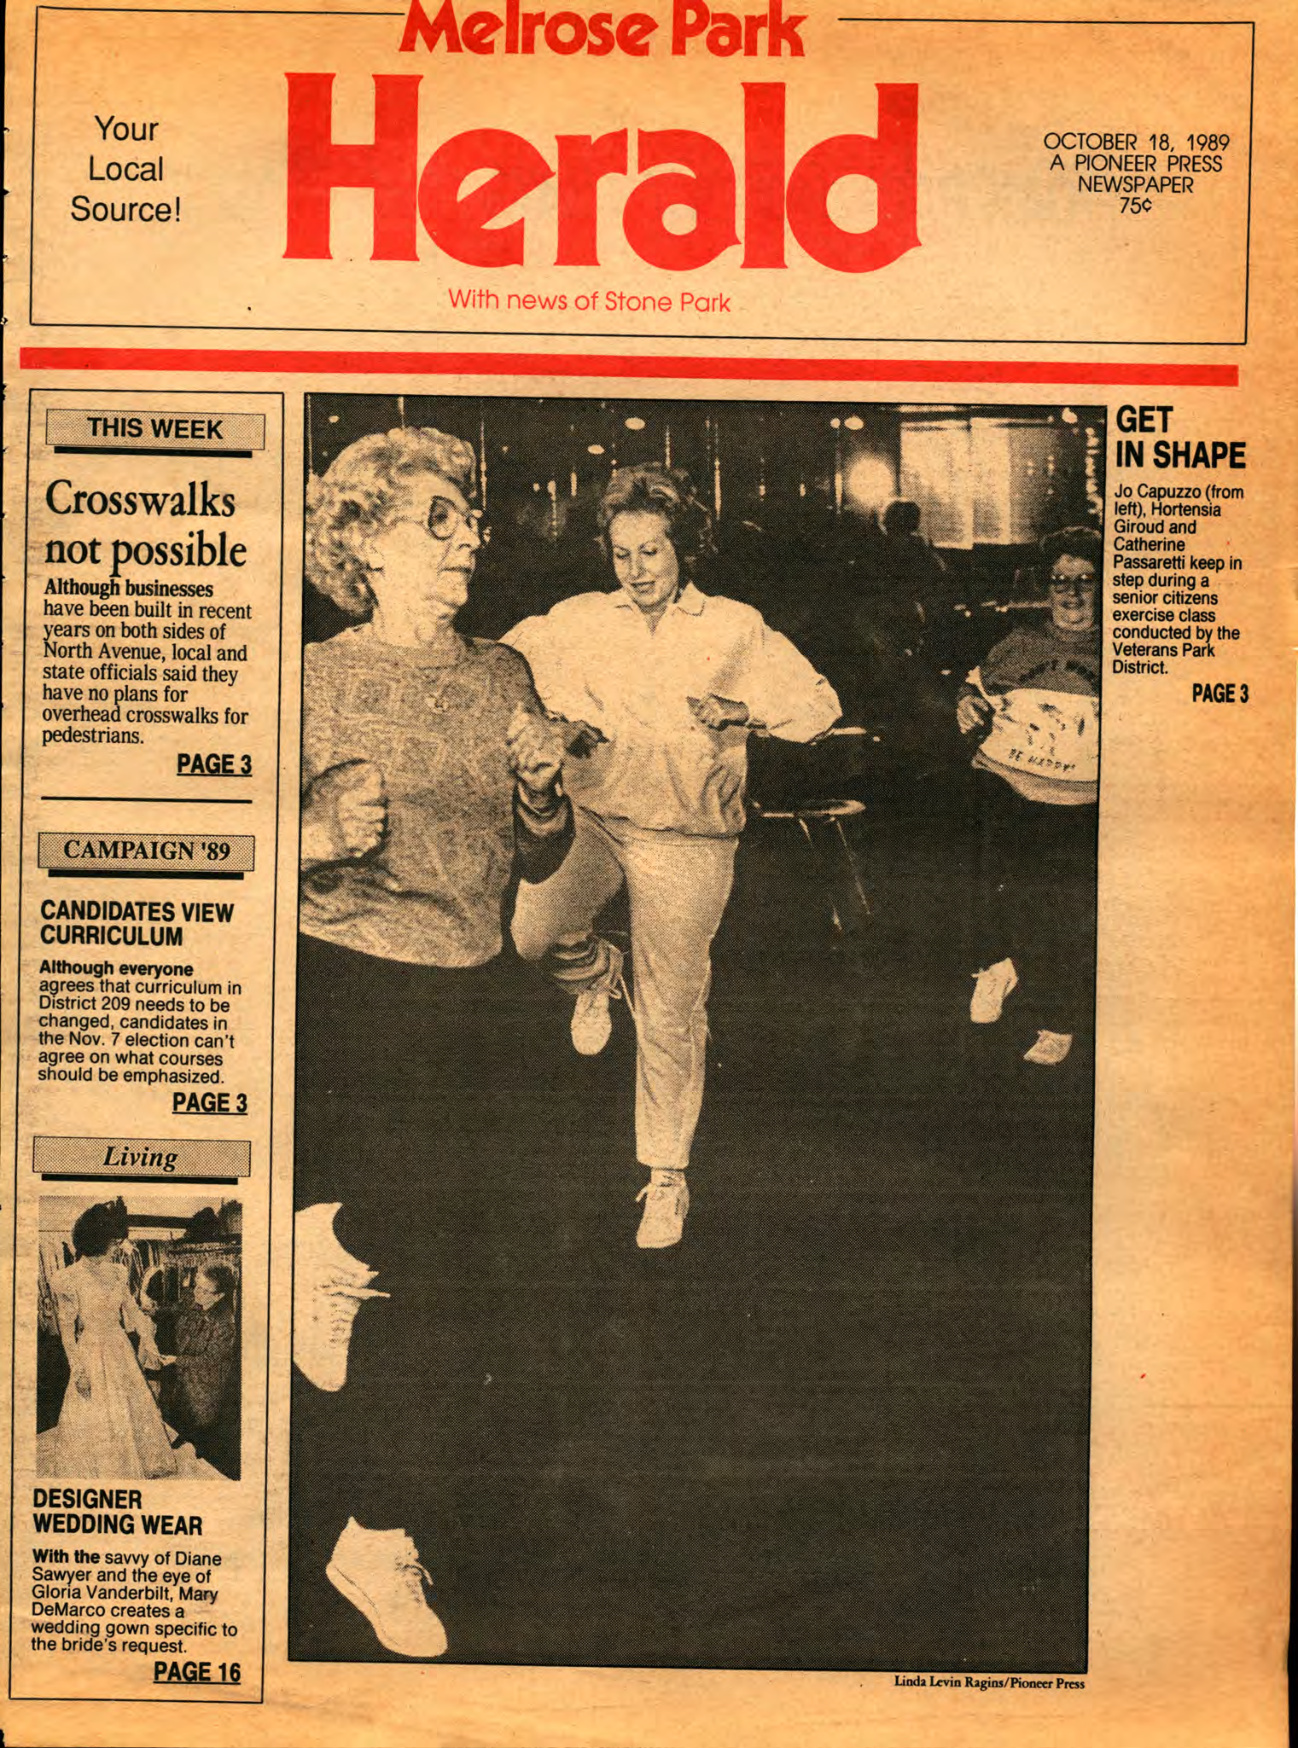 The Herald – 19891018